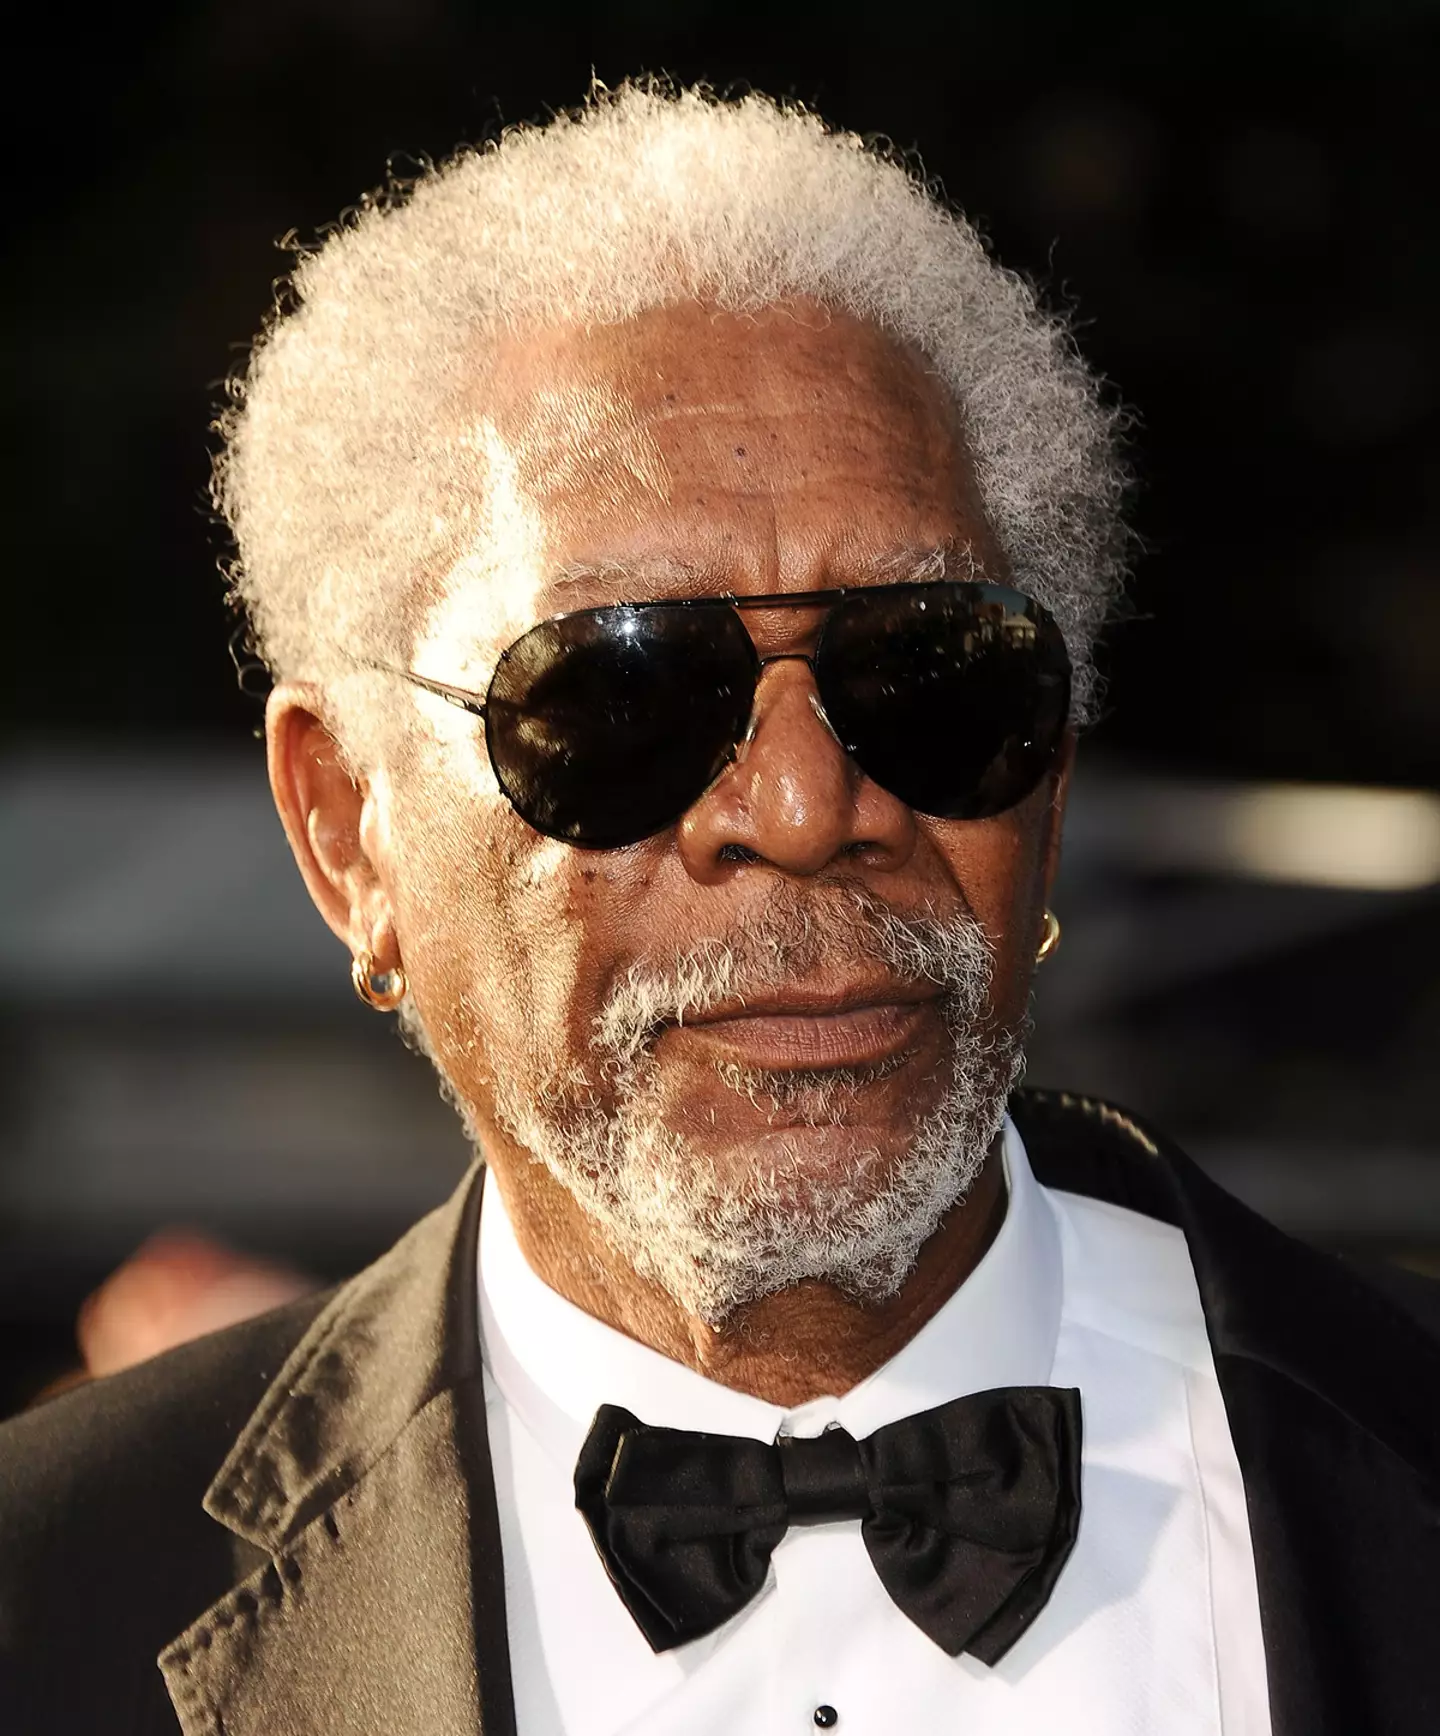 Morgan Freeman got his ears pierced when he was 35.